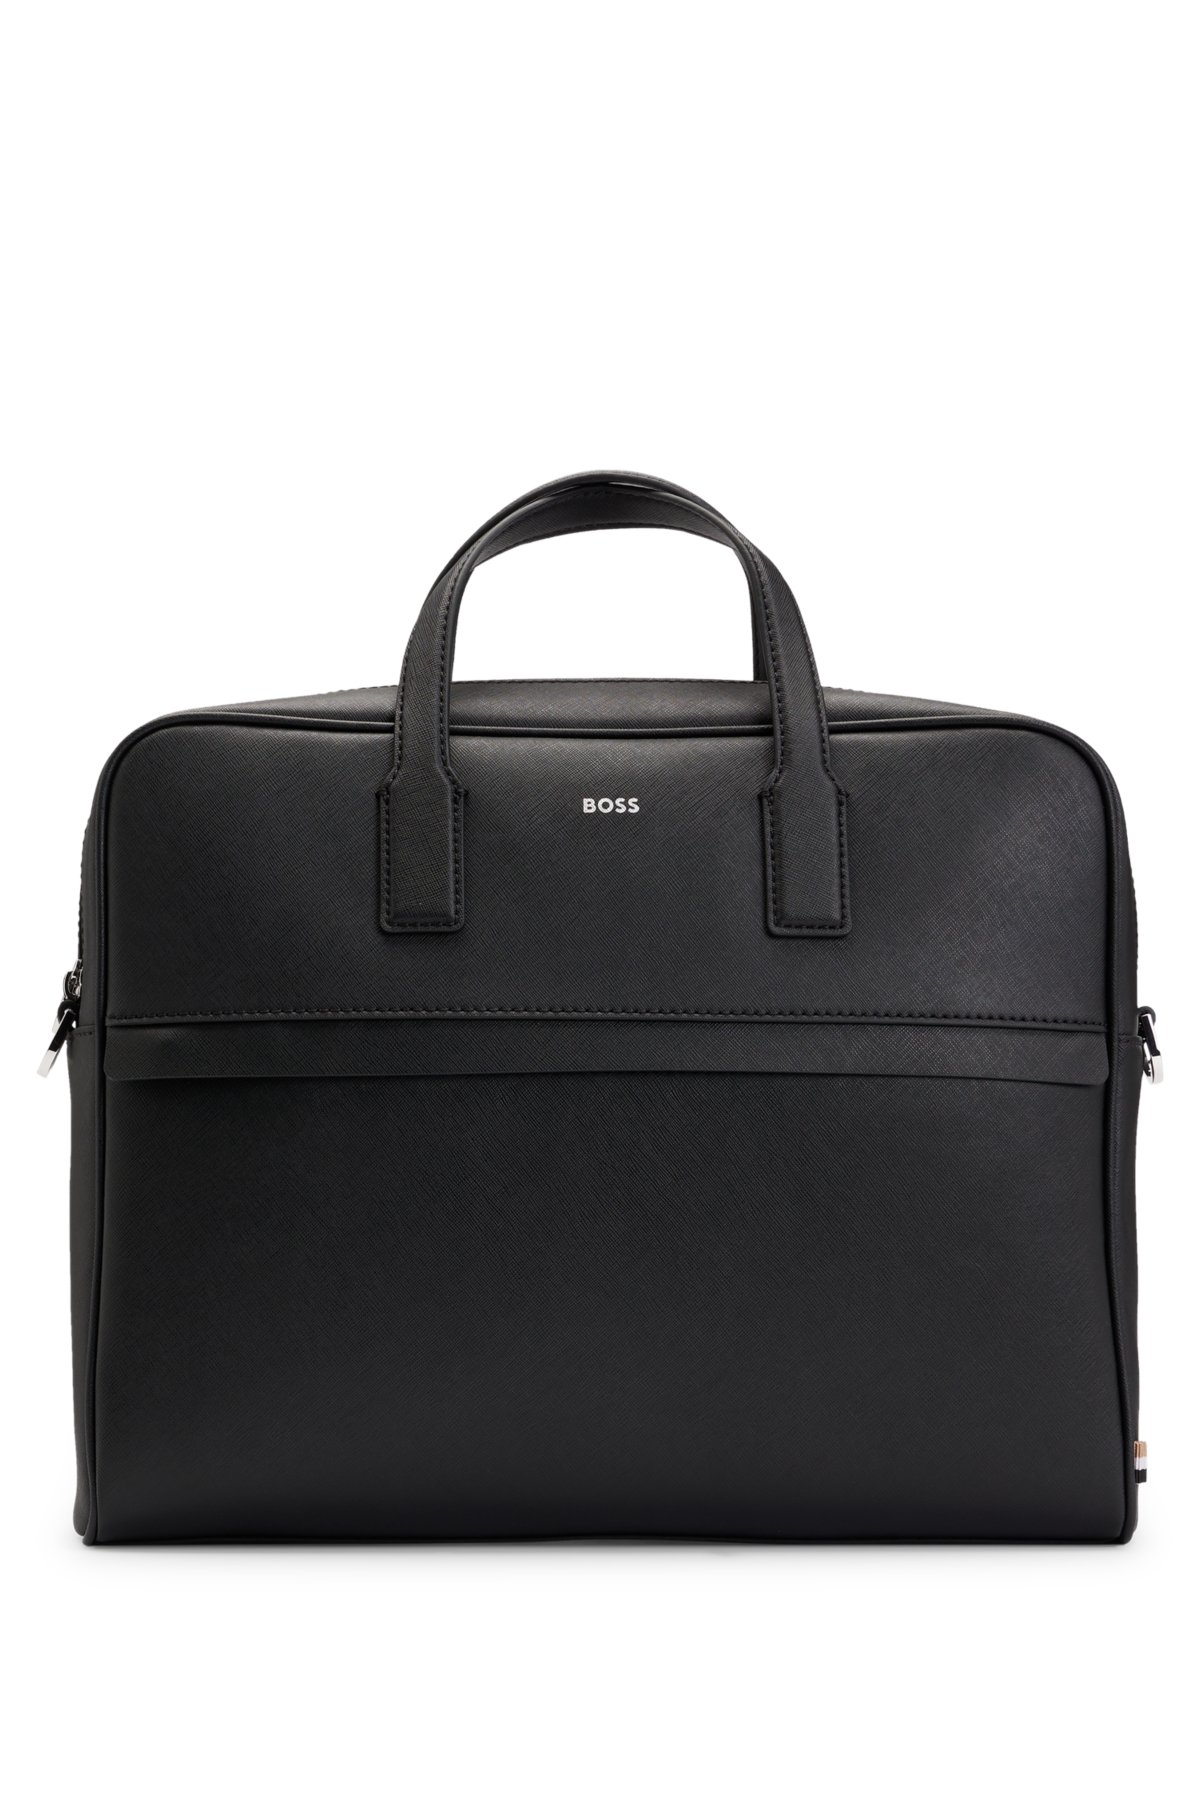 Black Embossed Leather workbag - Keep Your Essentials Organised